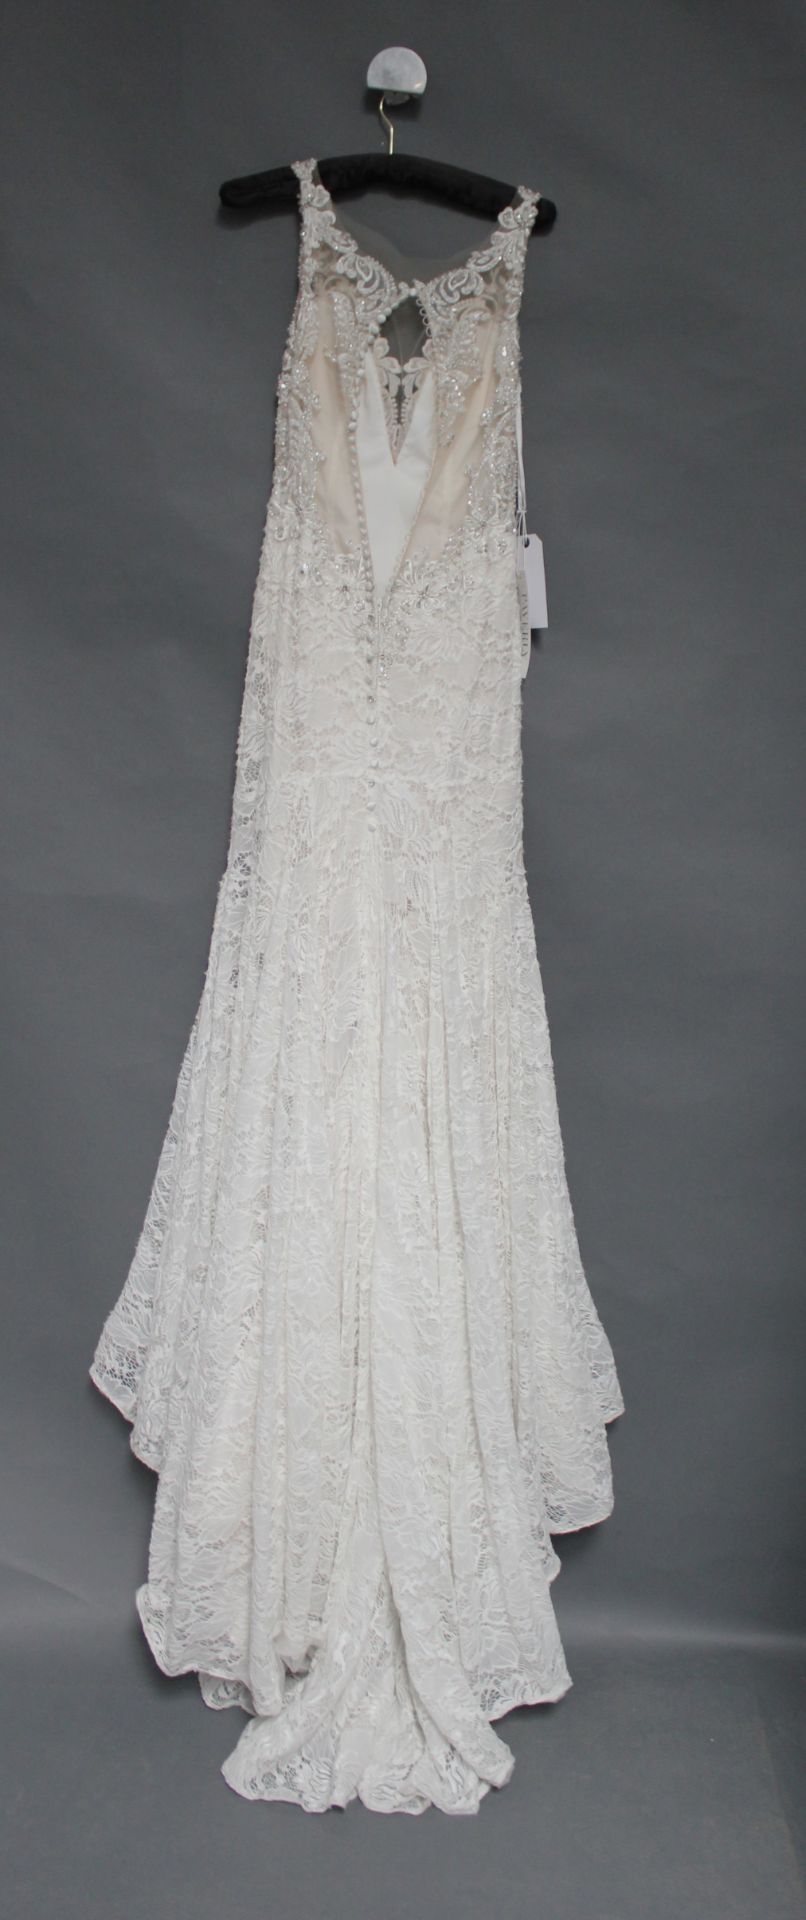 1 x ALLURE BRIDAL Stunning Lace And Beaded Plunge Neckline Designer Wedding Dress RRP £1,200 UK10 - Image 4 of 10